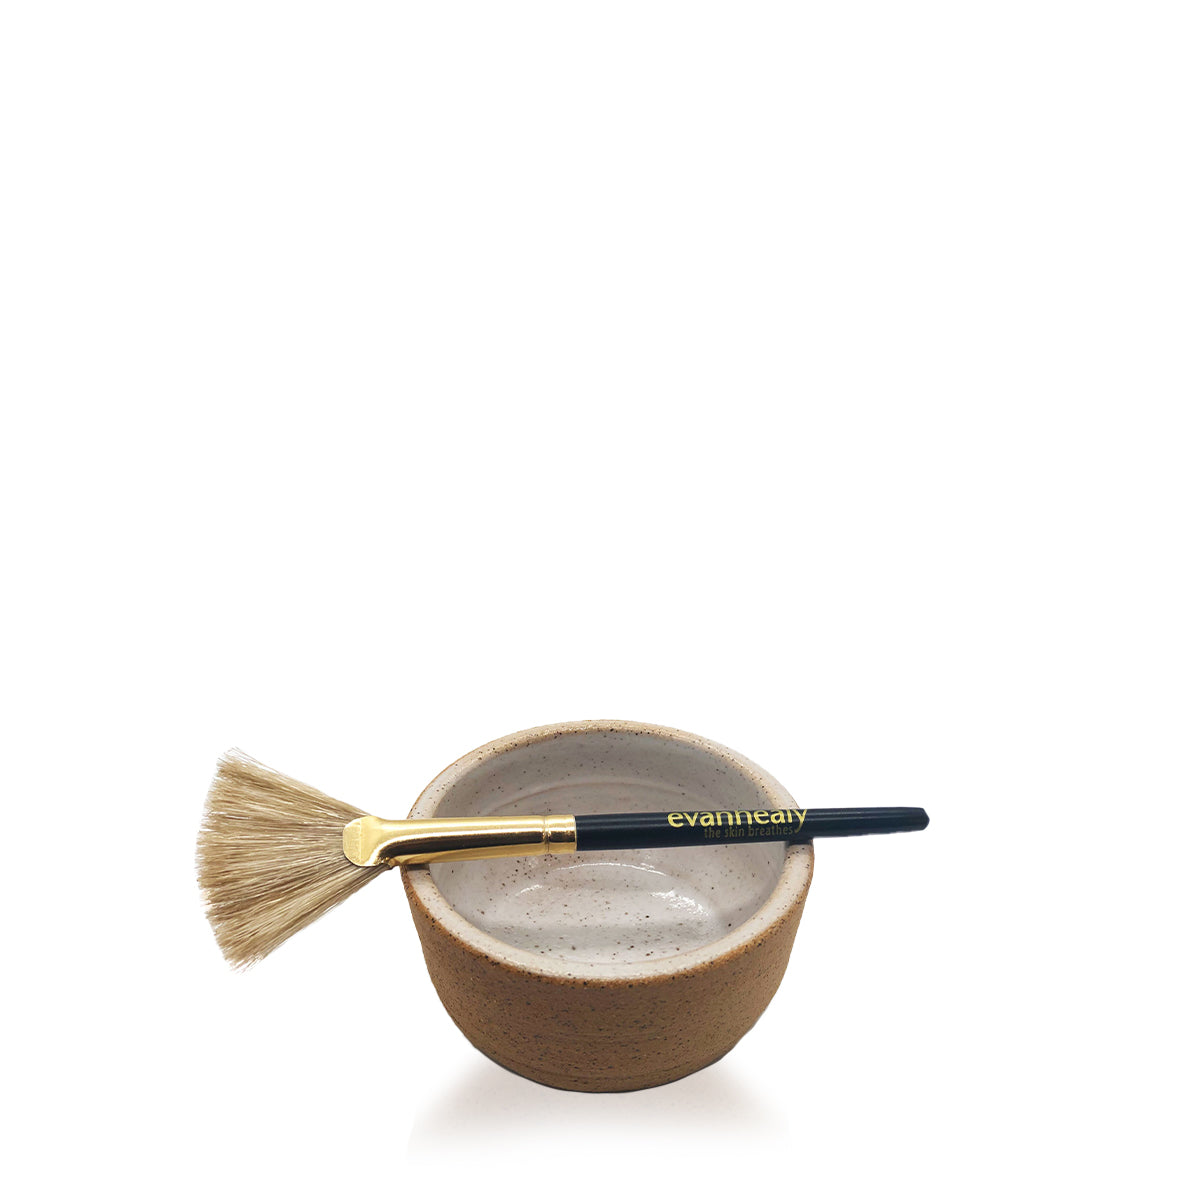 Black Earthenware Mixing Clay Mask Bowl Set – by valenti® ORGANICS